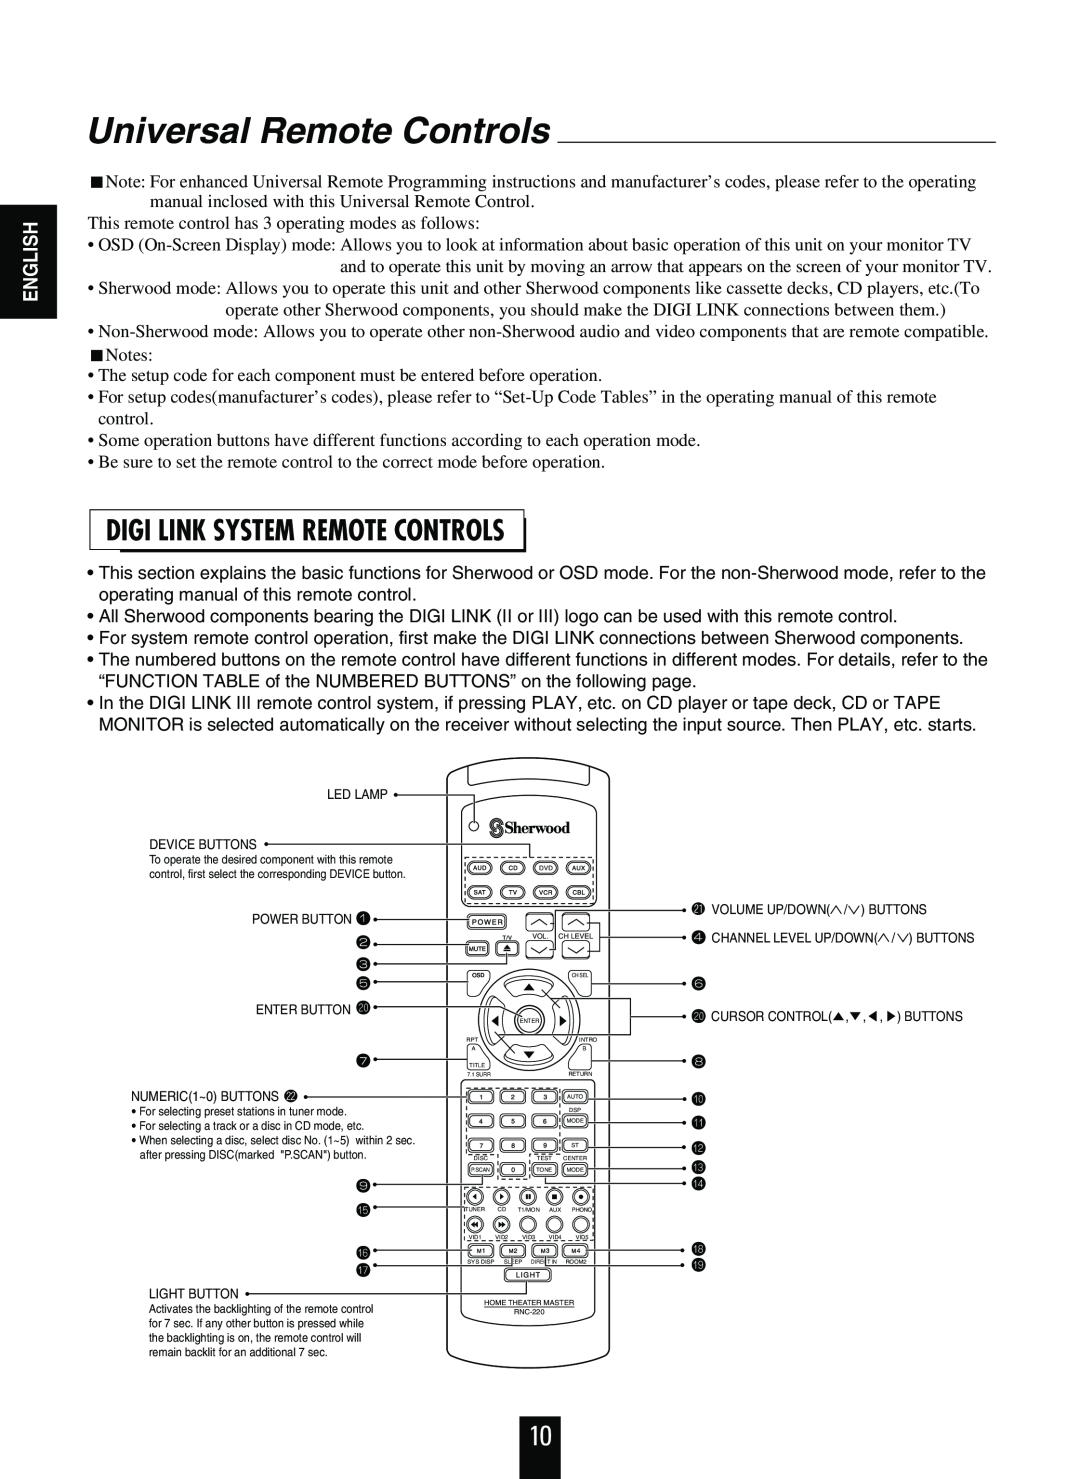 Sherwood R-863 manual Universal Remote Controls, Digi Link System Remote Controls, English 